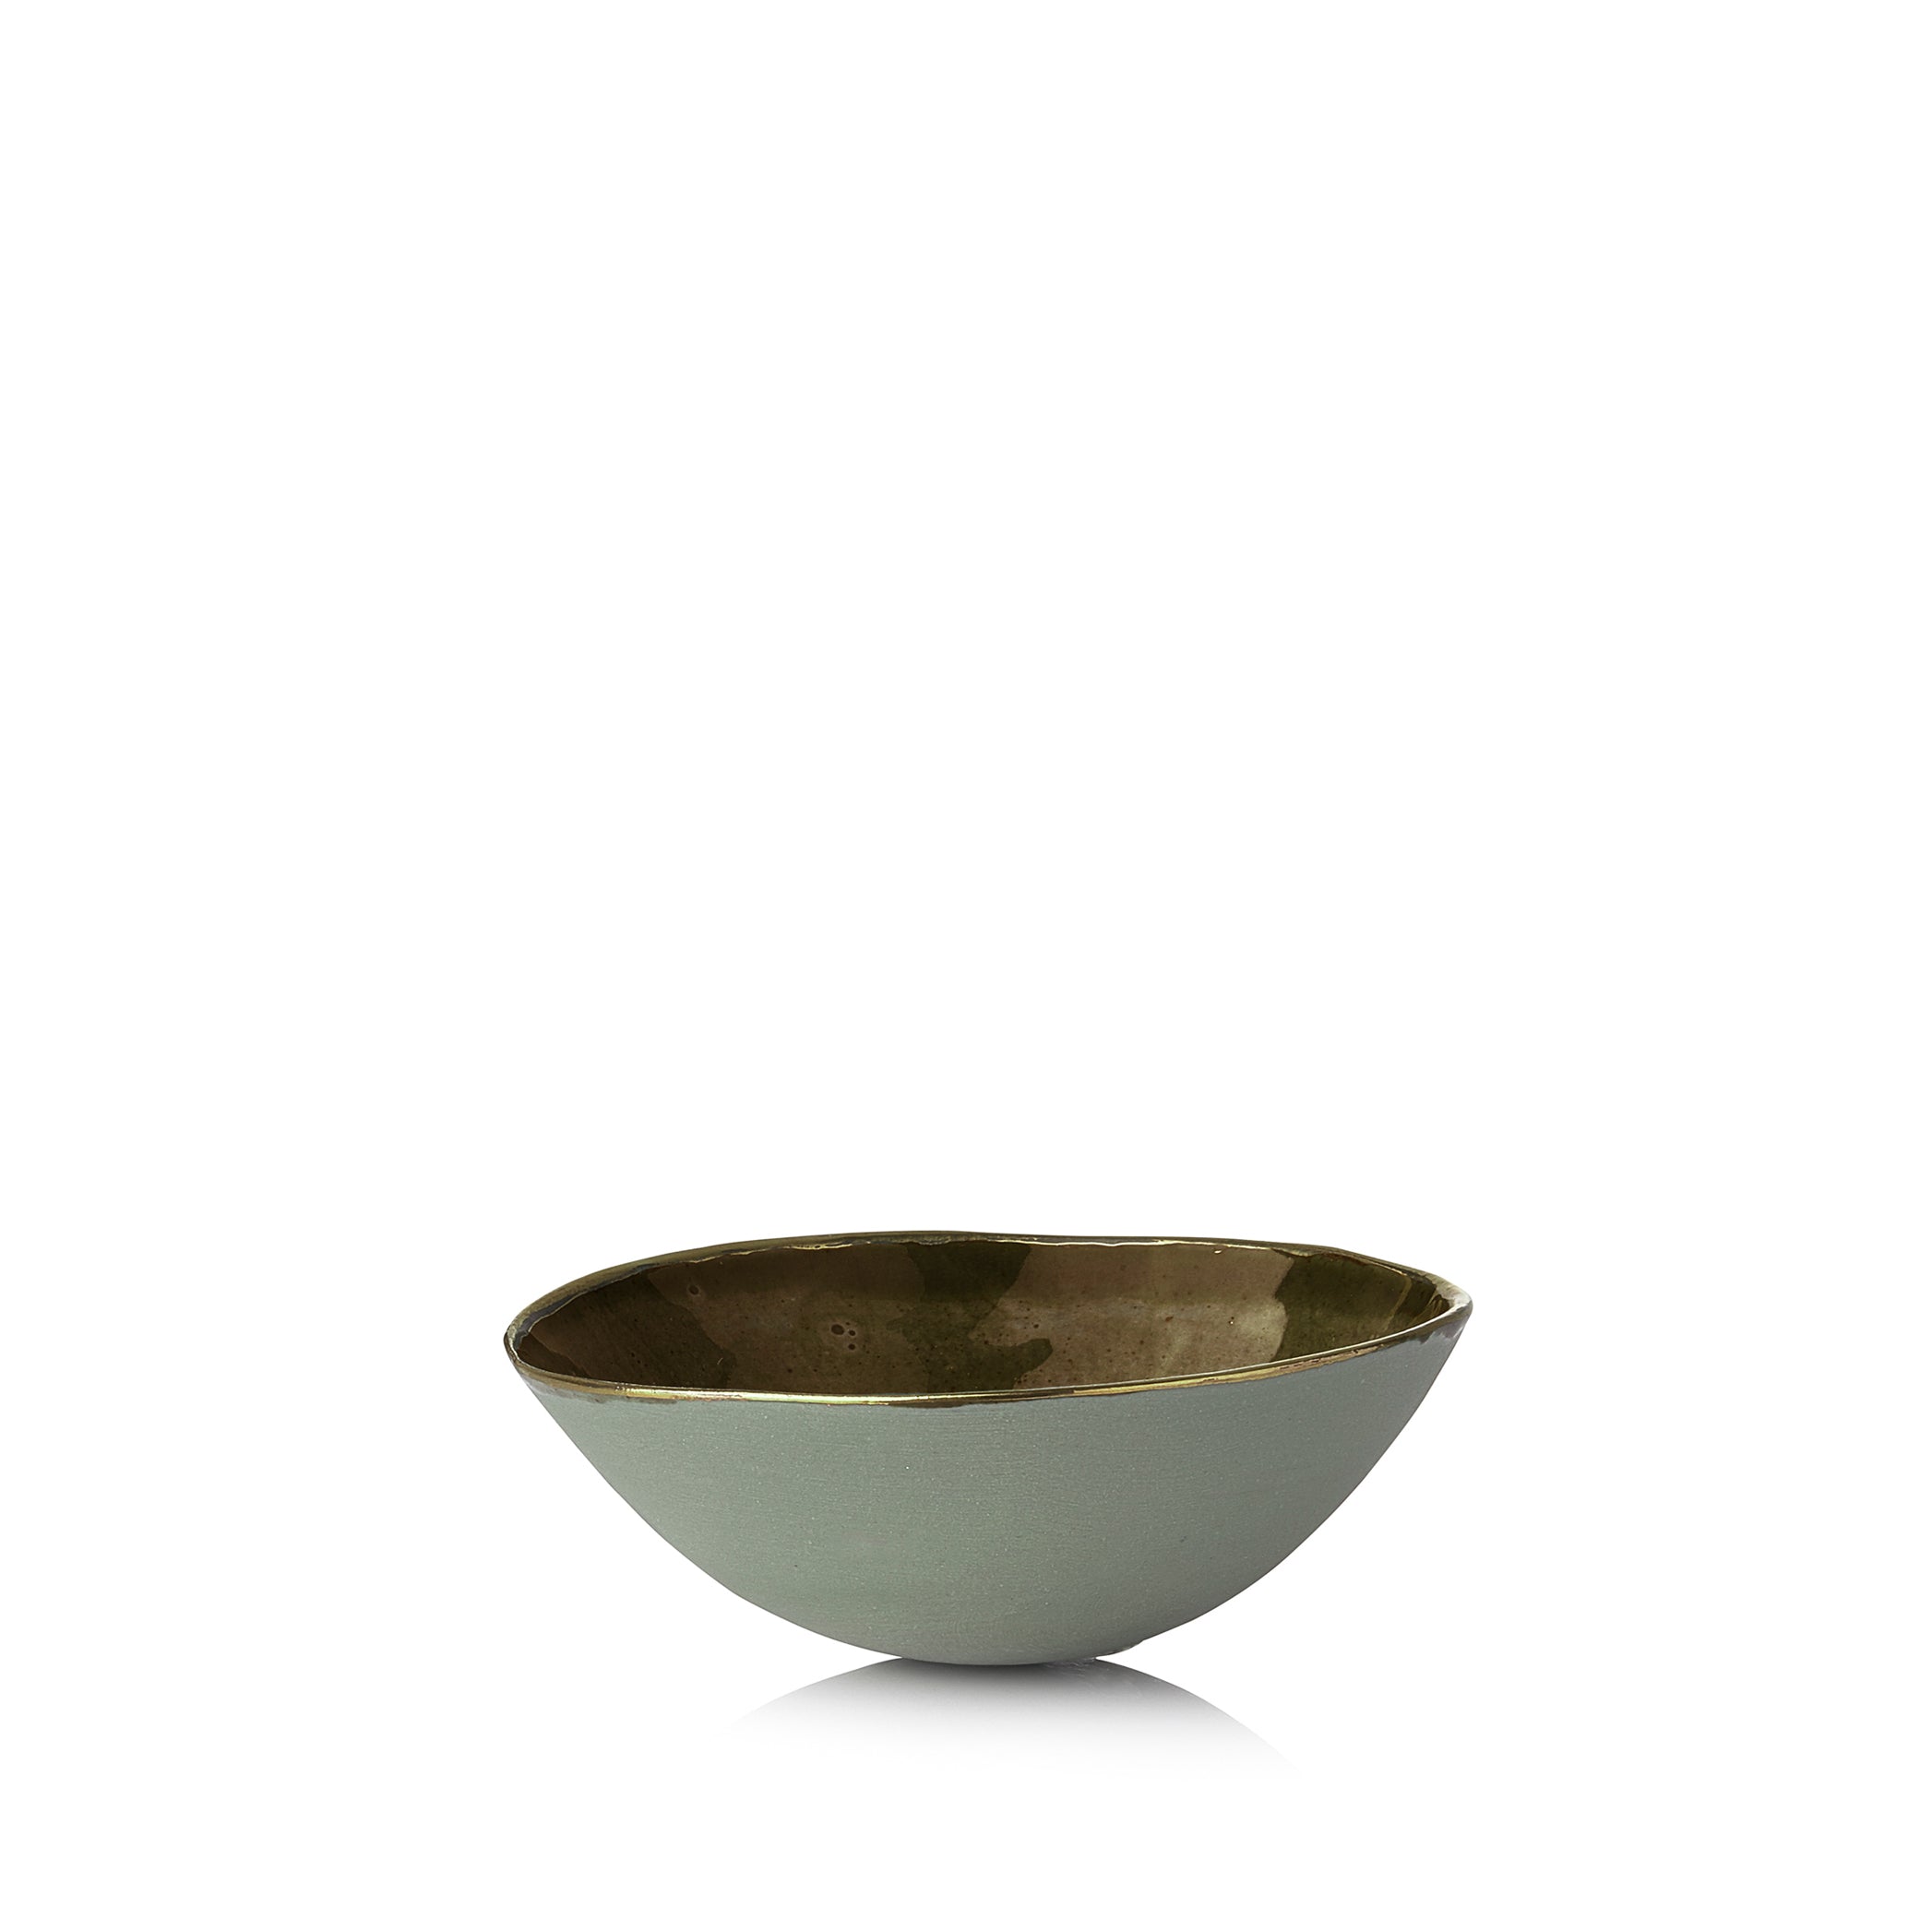 Olive Green Ceramic Bowl with Gold Rim, 10cm